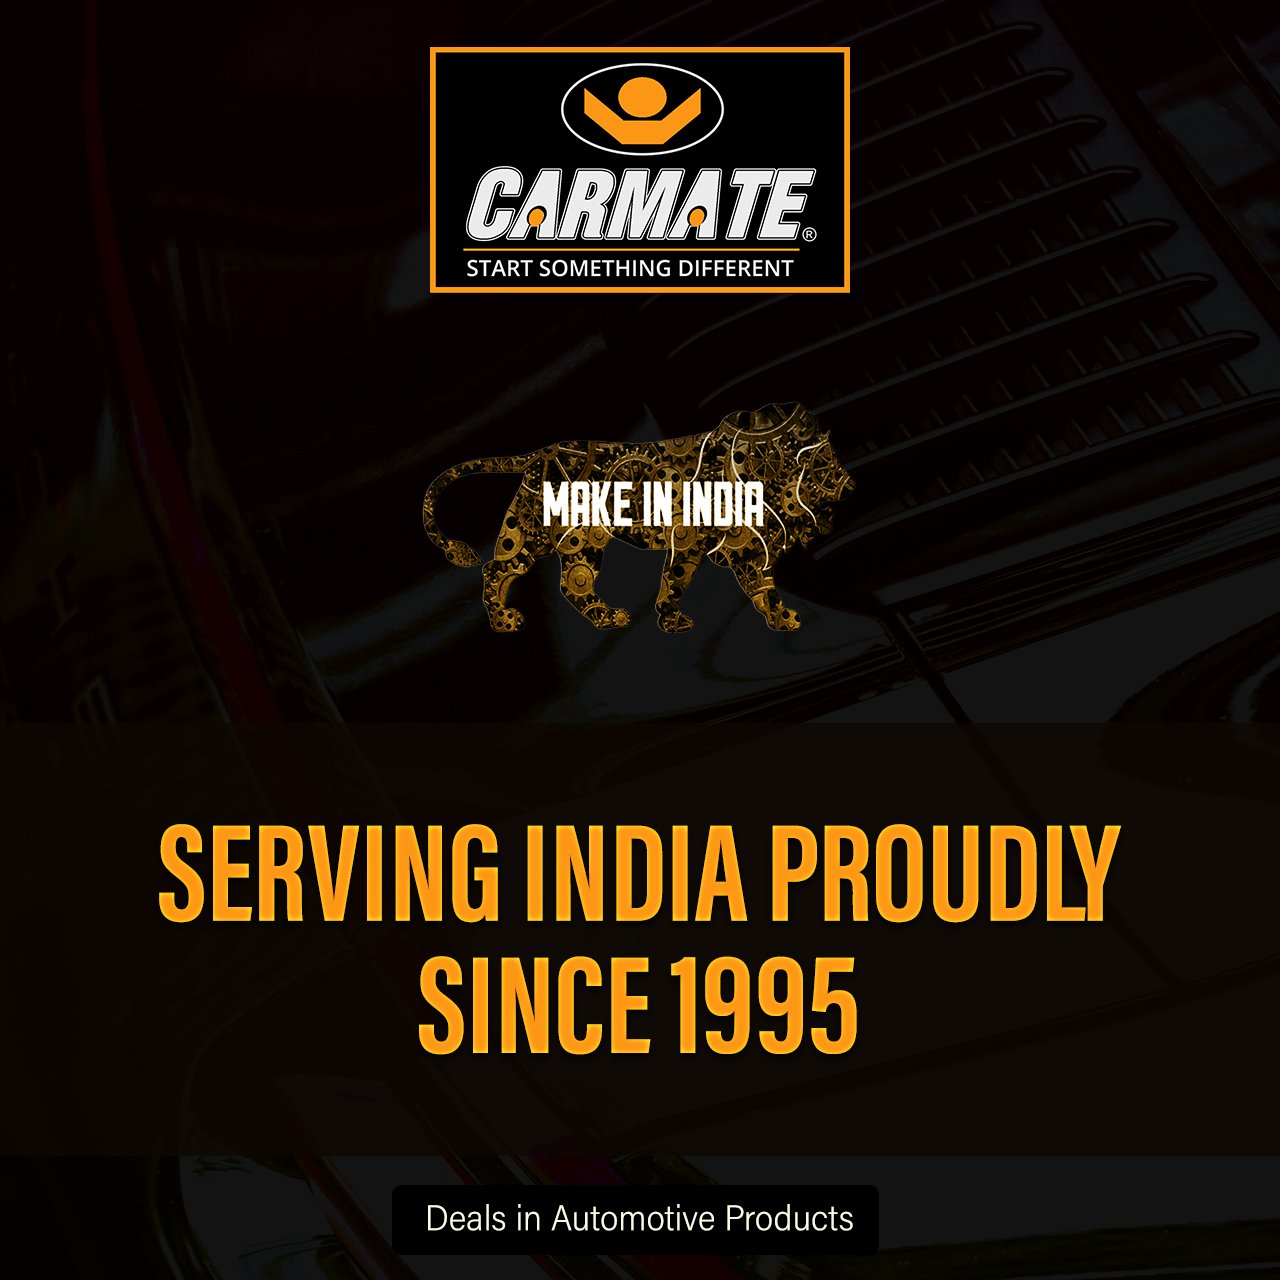 Carmate Car Steering Cover Ring Type Sporty Grip (Black and Camel) For Maruti - Ertiga 2018 (Medium) - CARMATE®